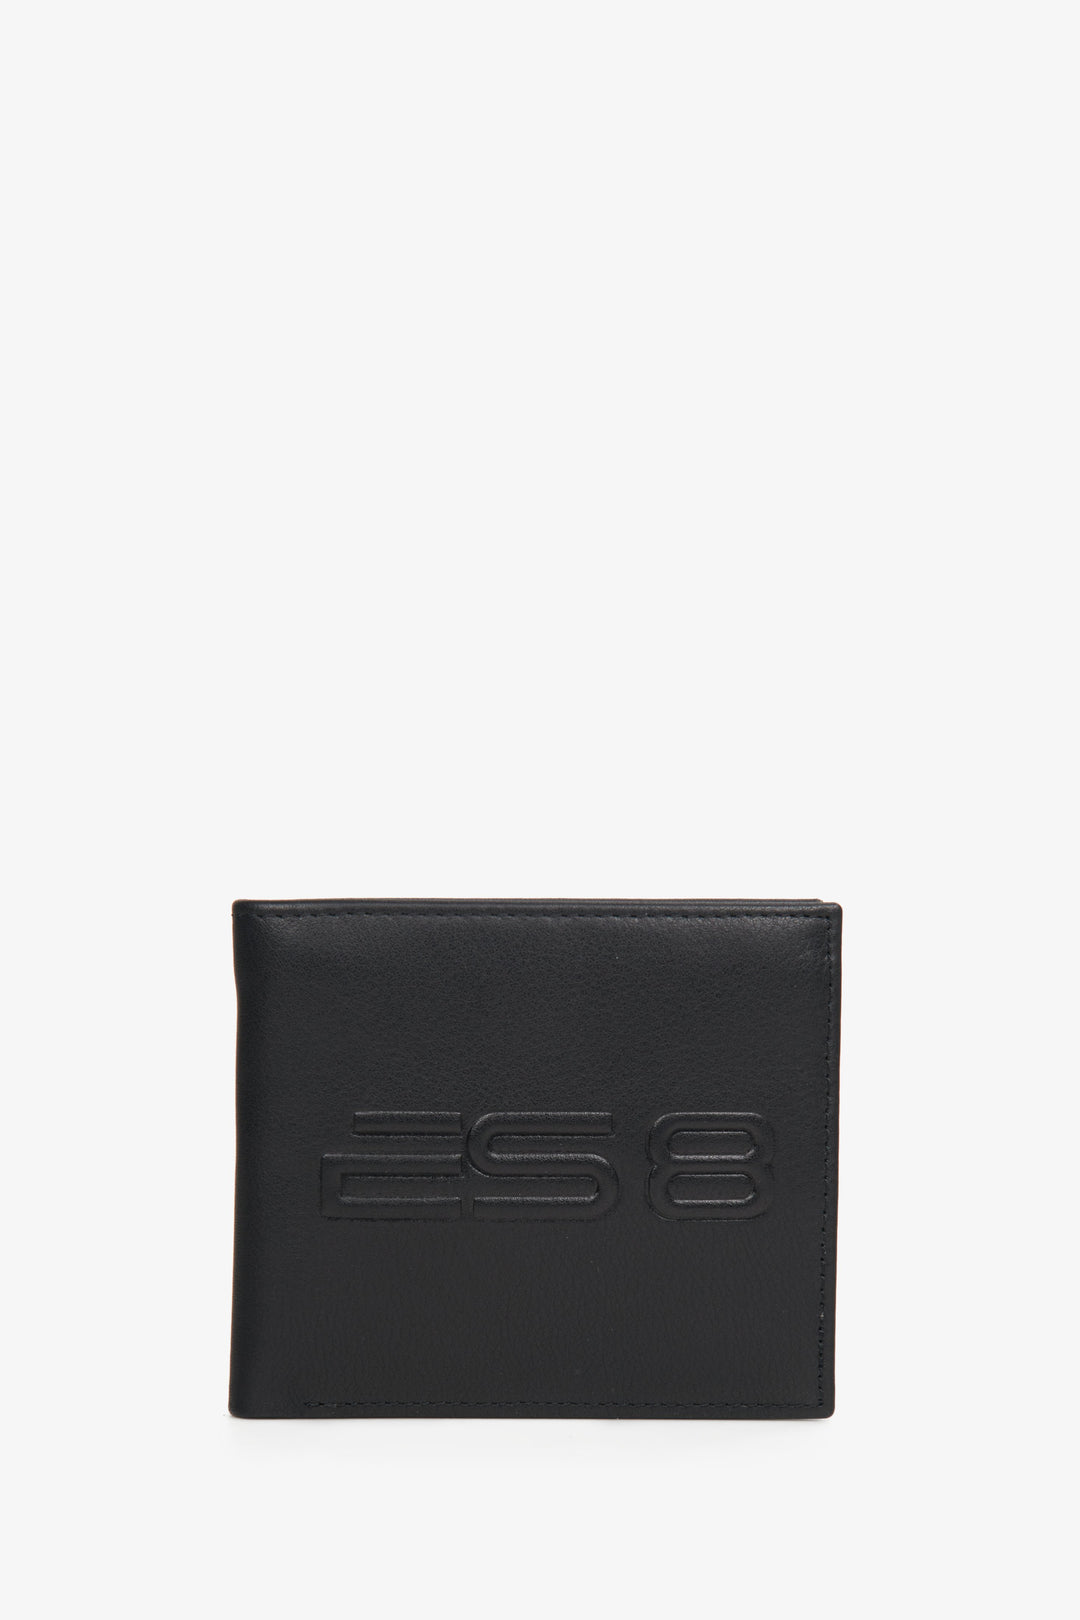 Men's black leather wallet by ES8.